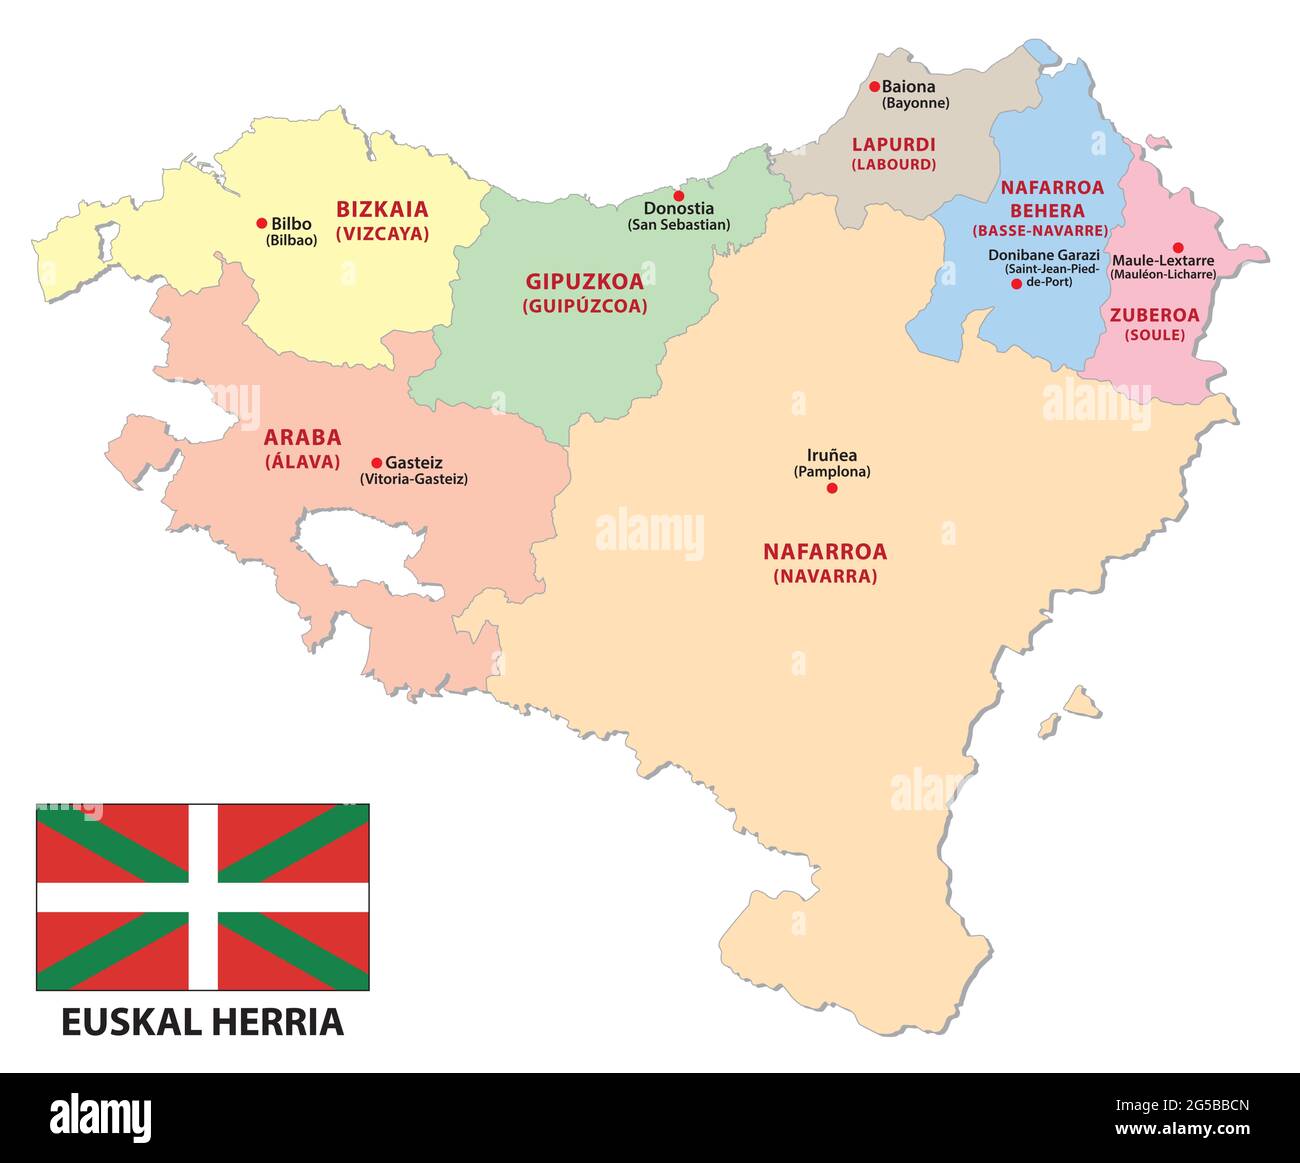 Paesi baschi cartina immagini e fotografie stock ad alta risoluzione - Alamy